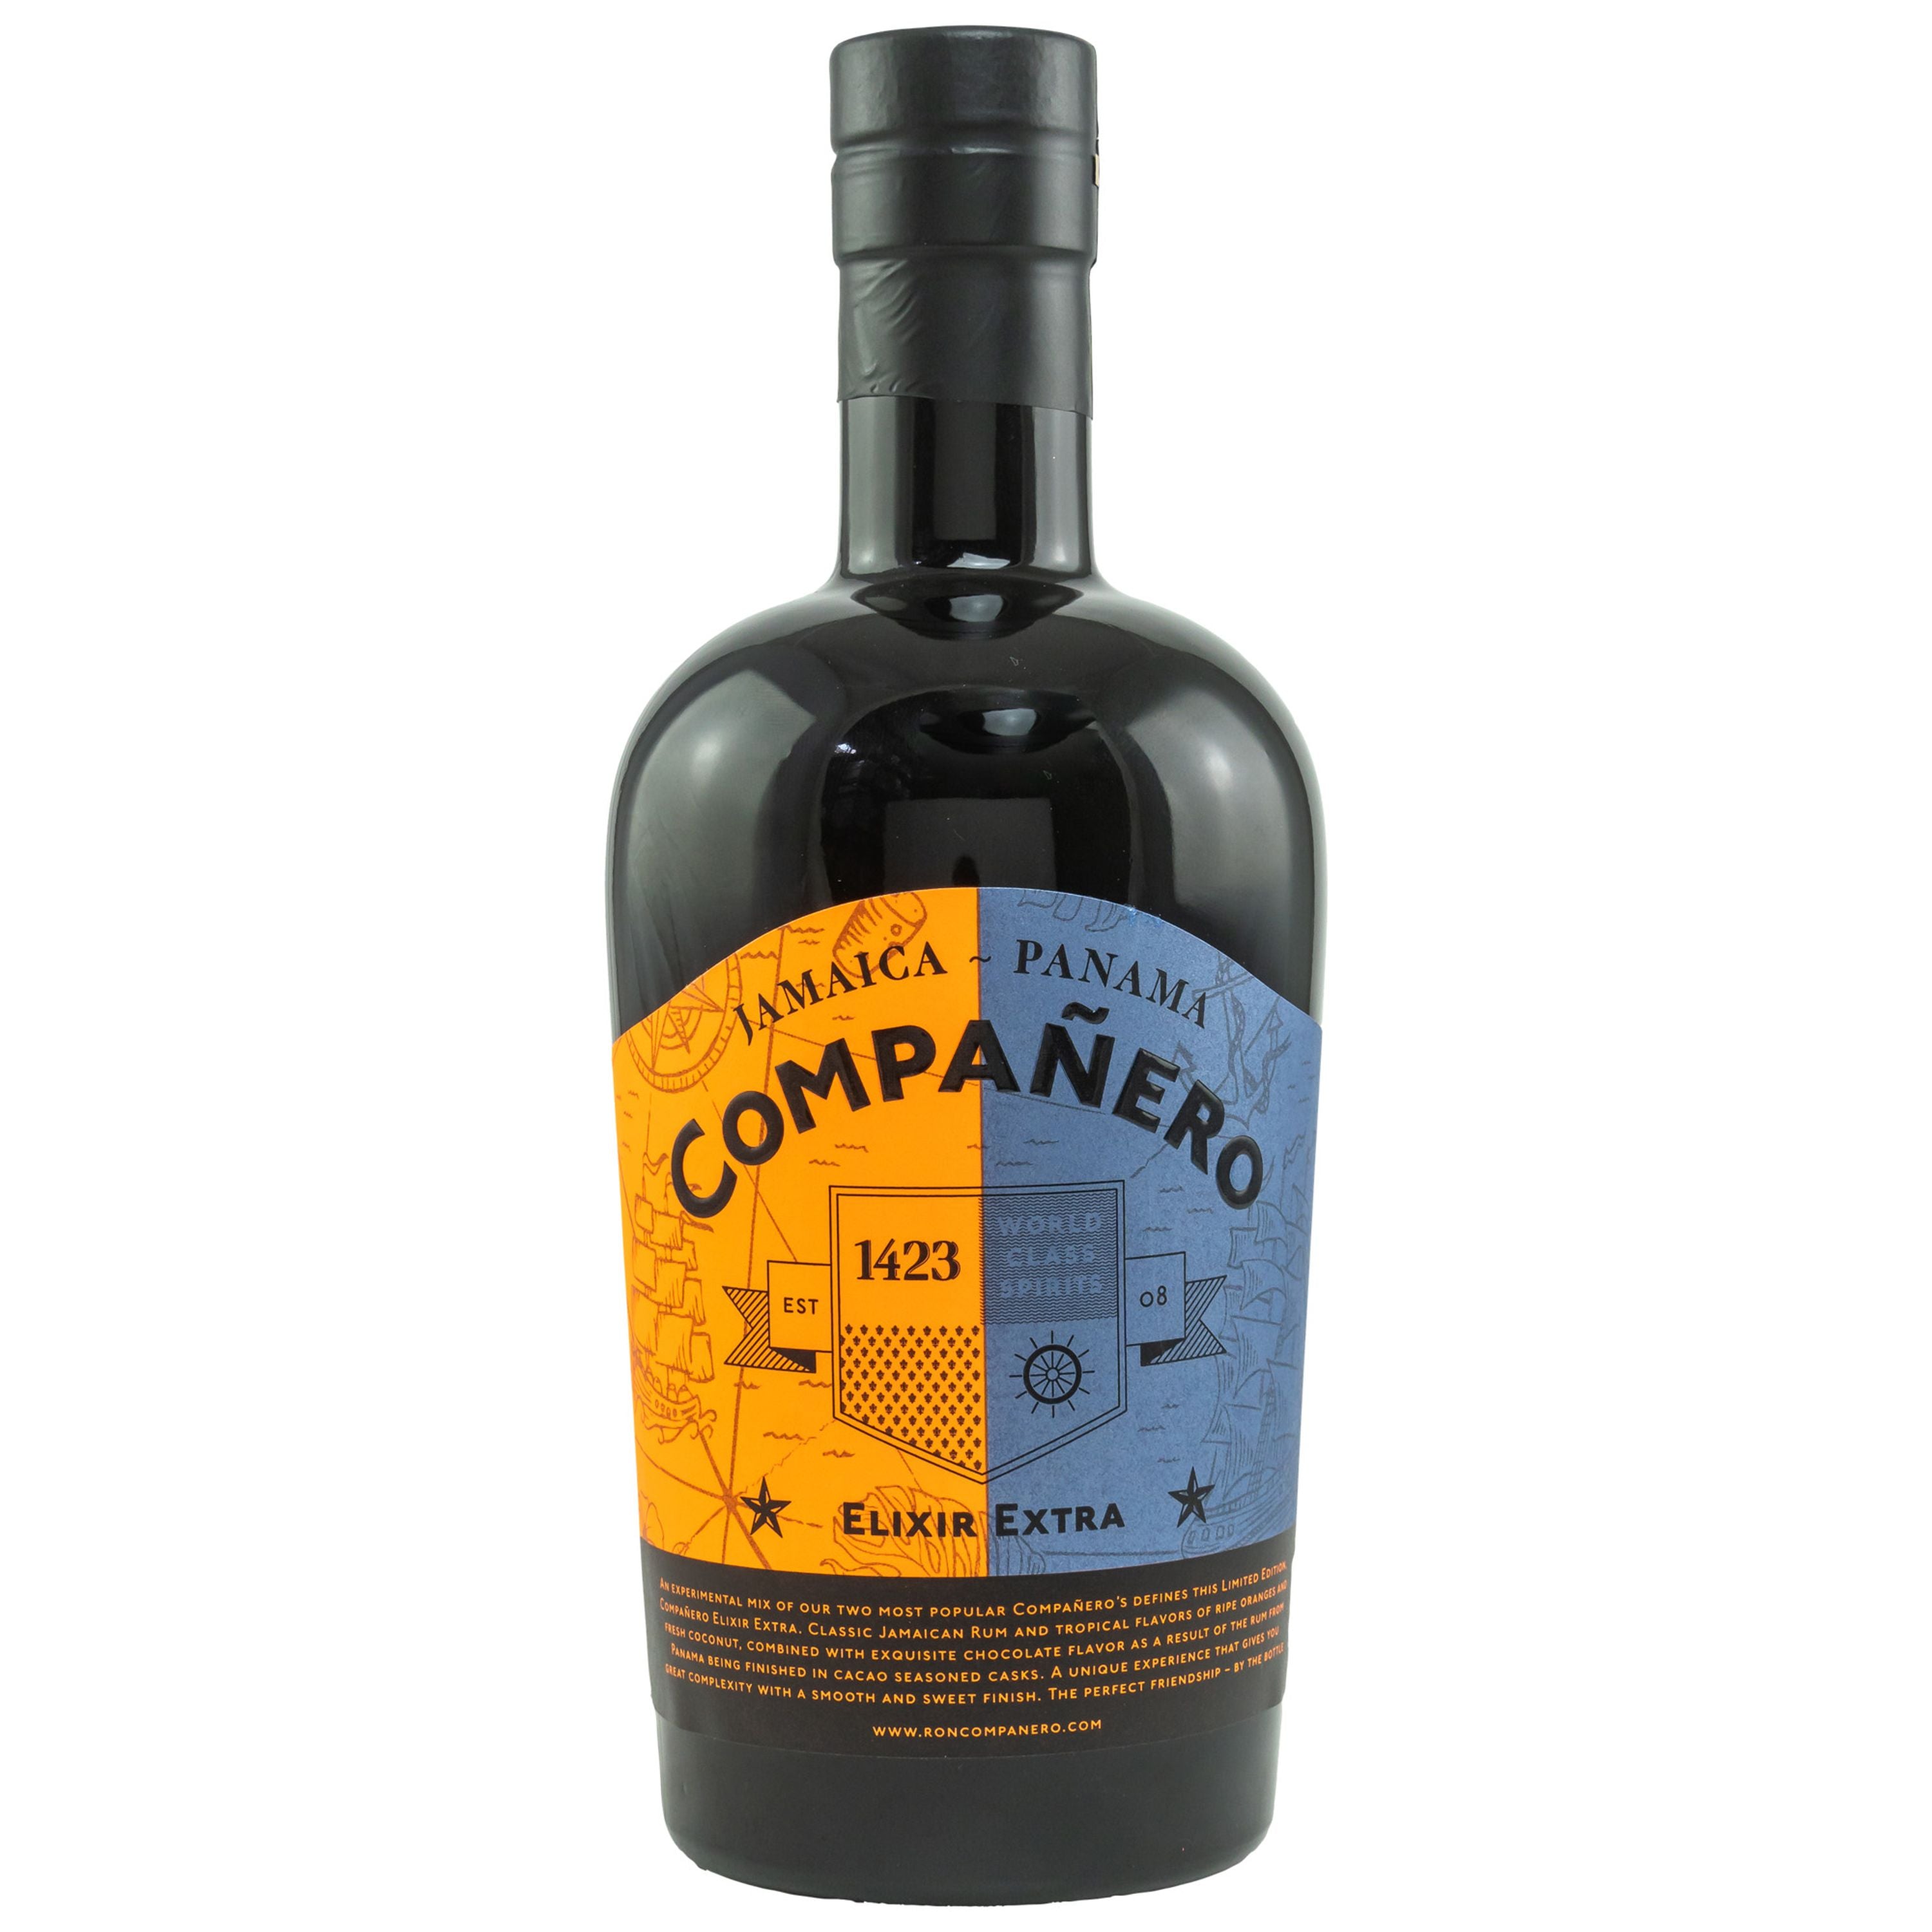 Companero Elixir Extra 0,7l, alc. 47 Vol.-%, Rum-Likör Jamaika-Panama